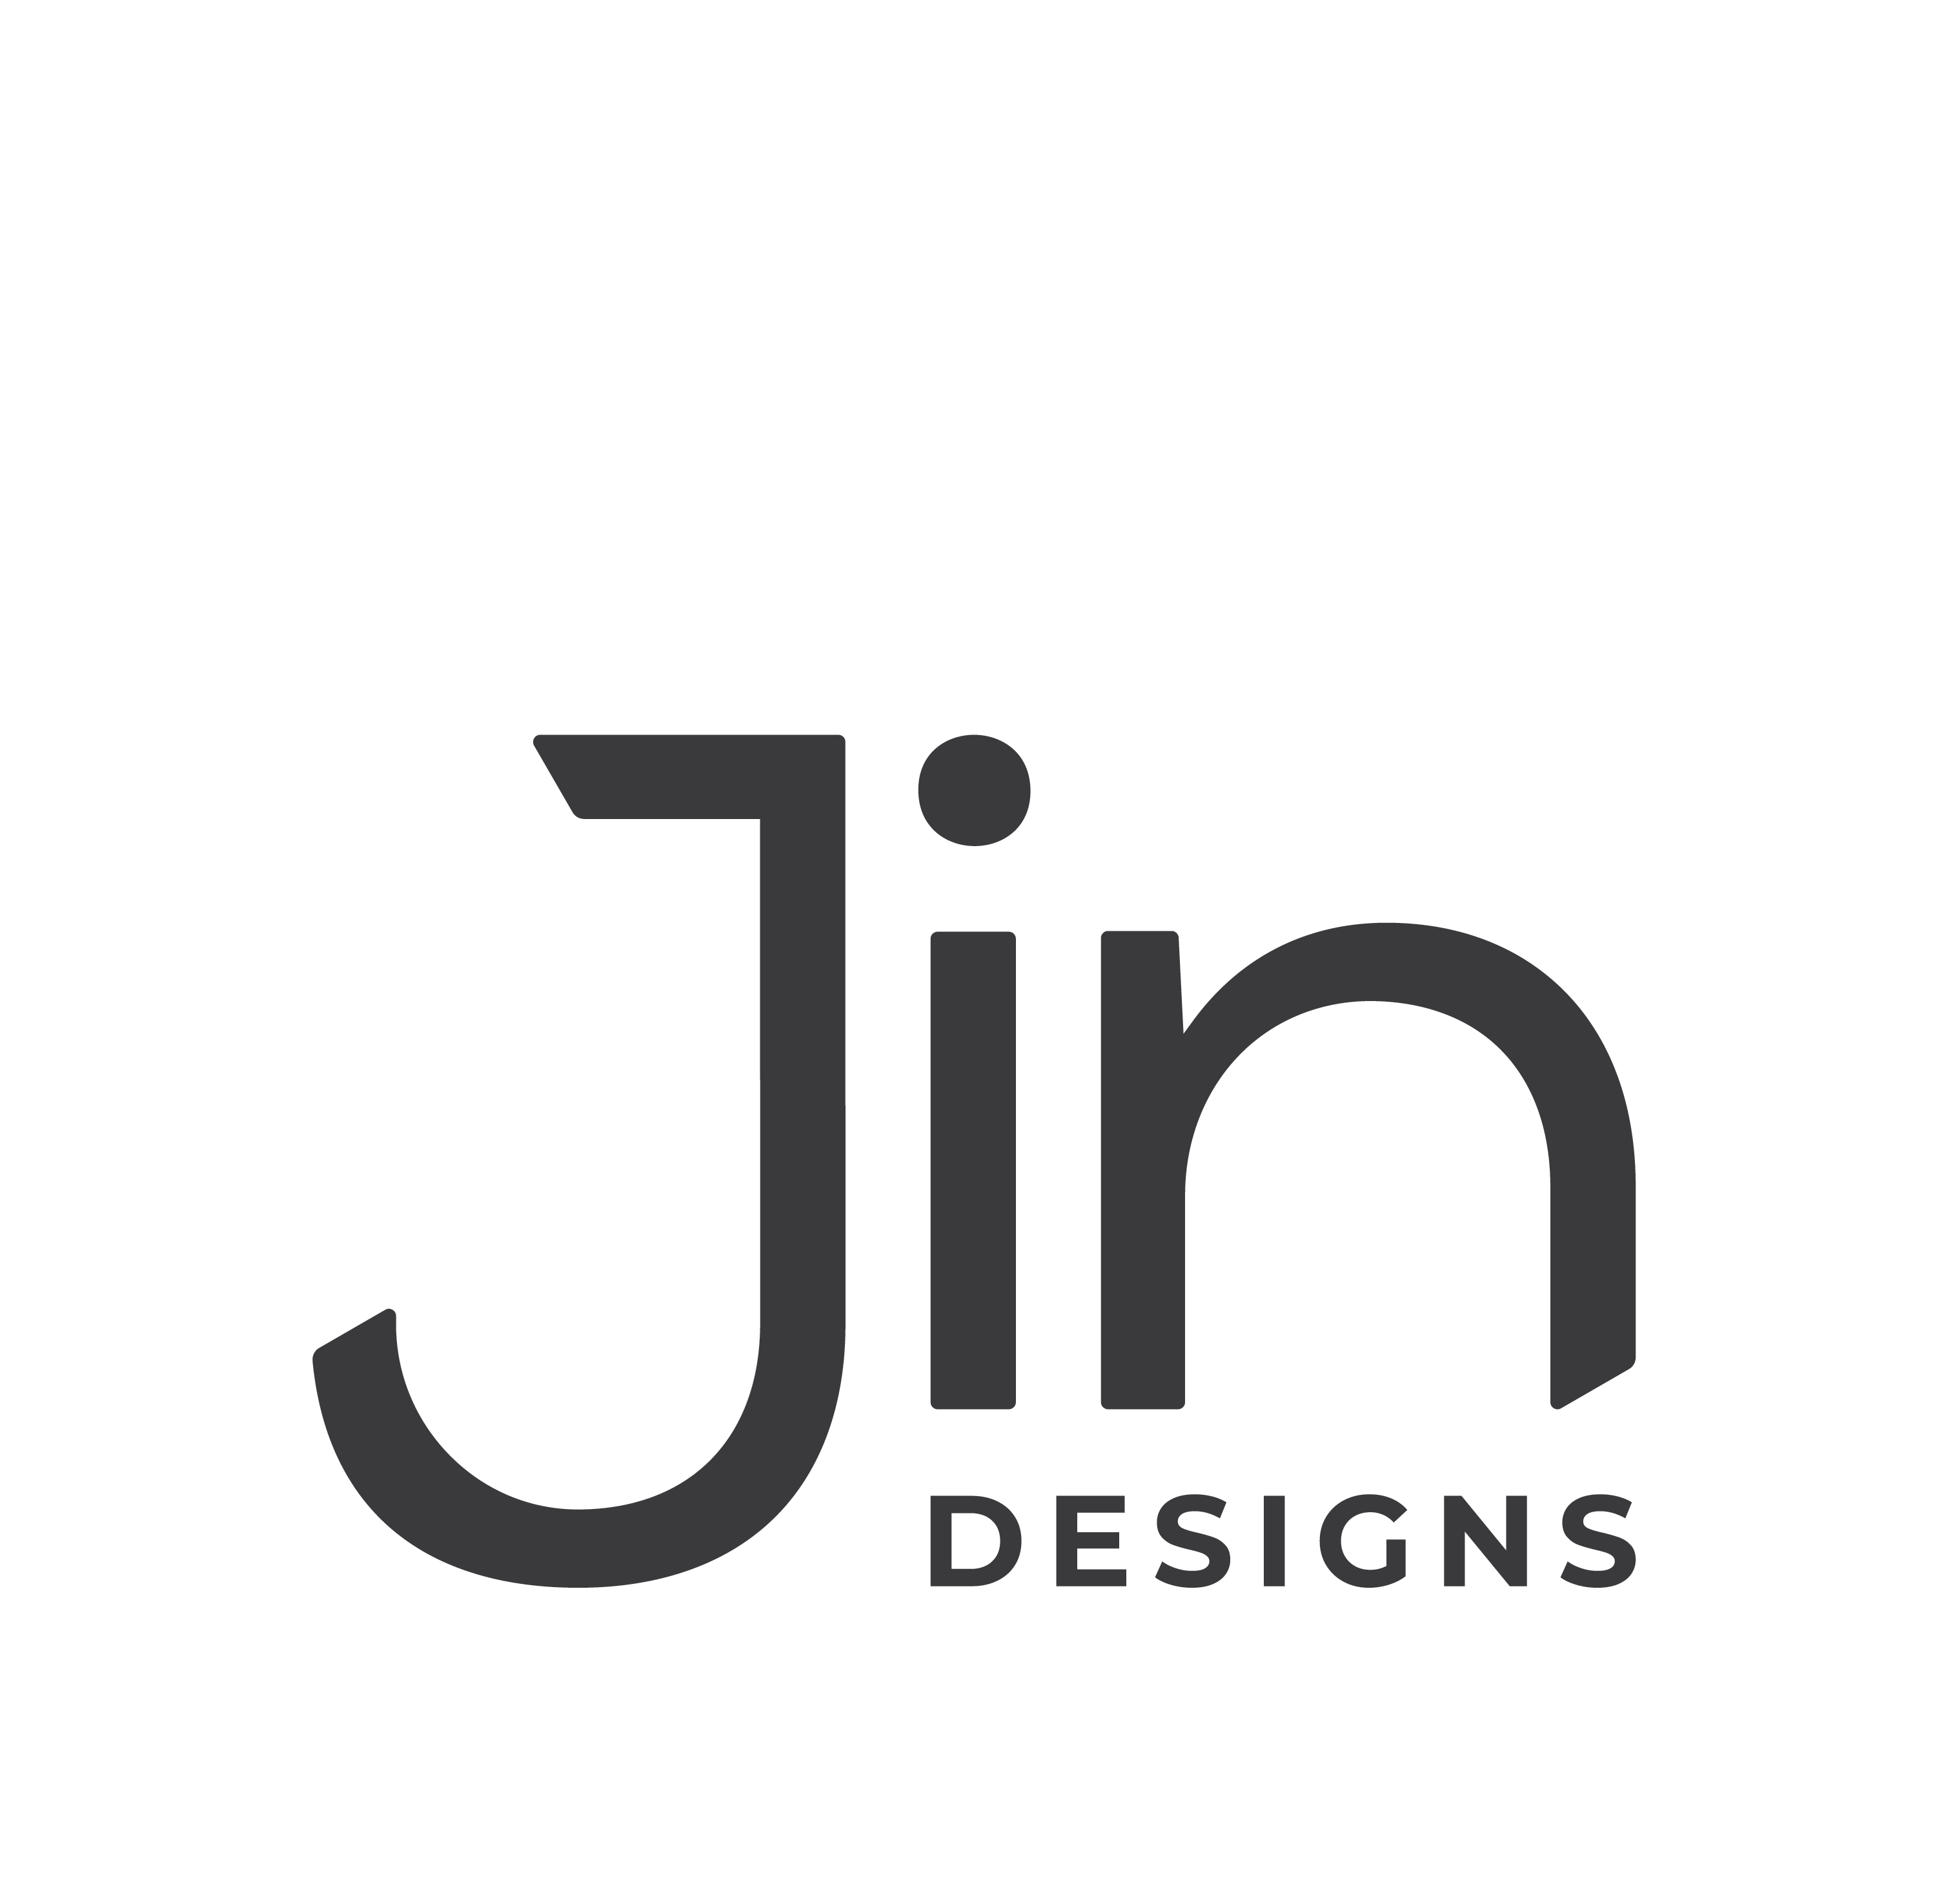 Jin Designs